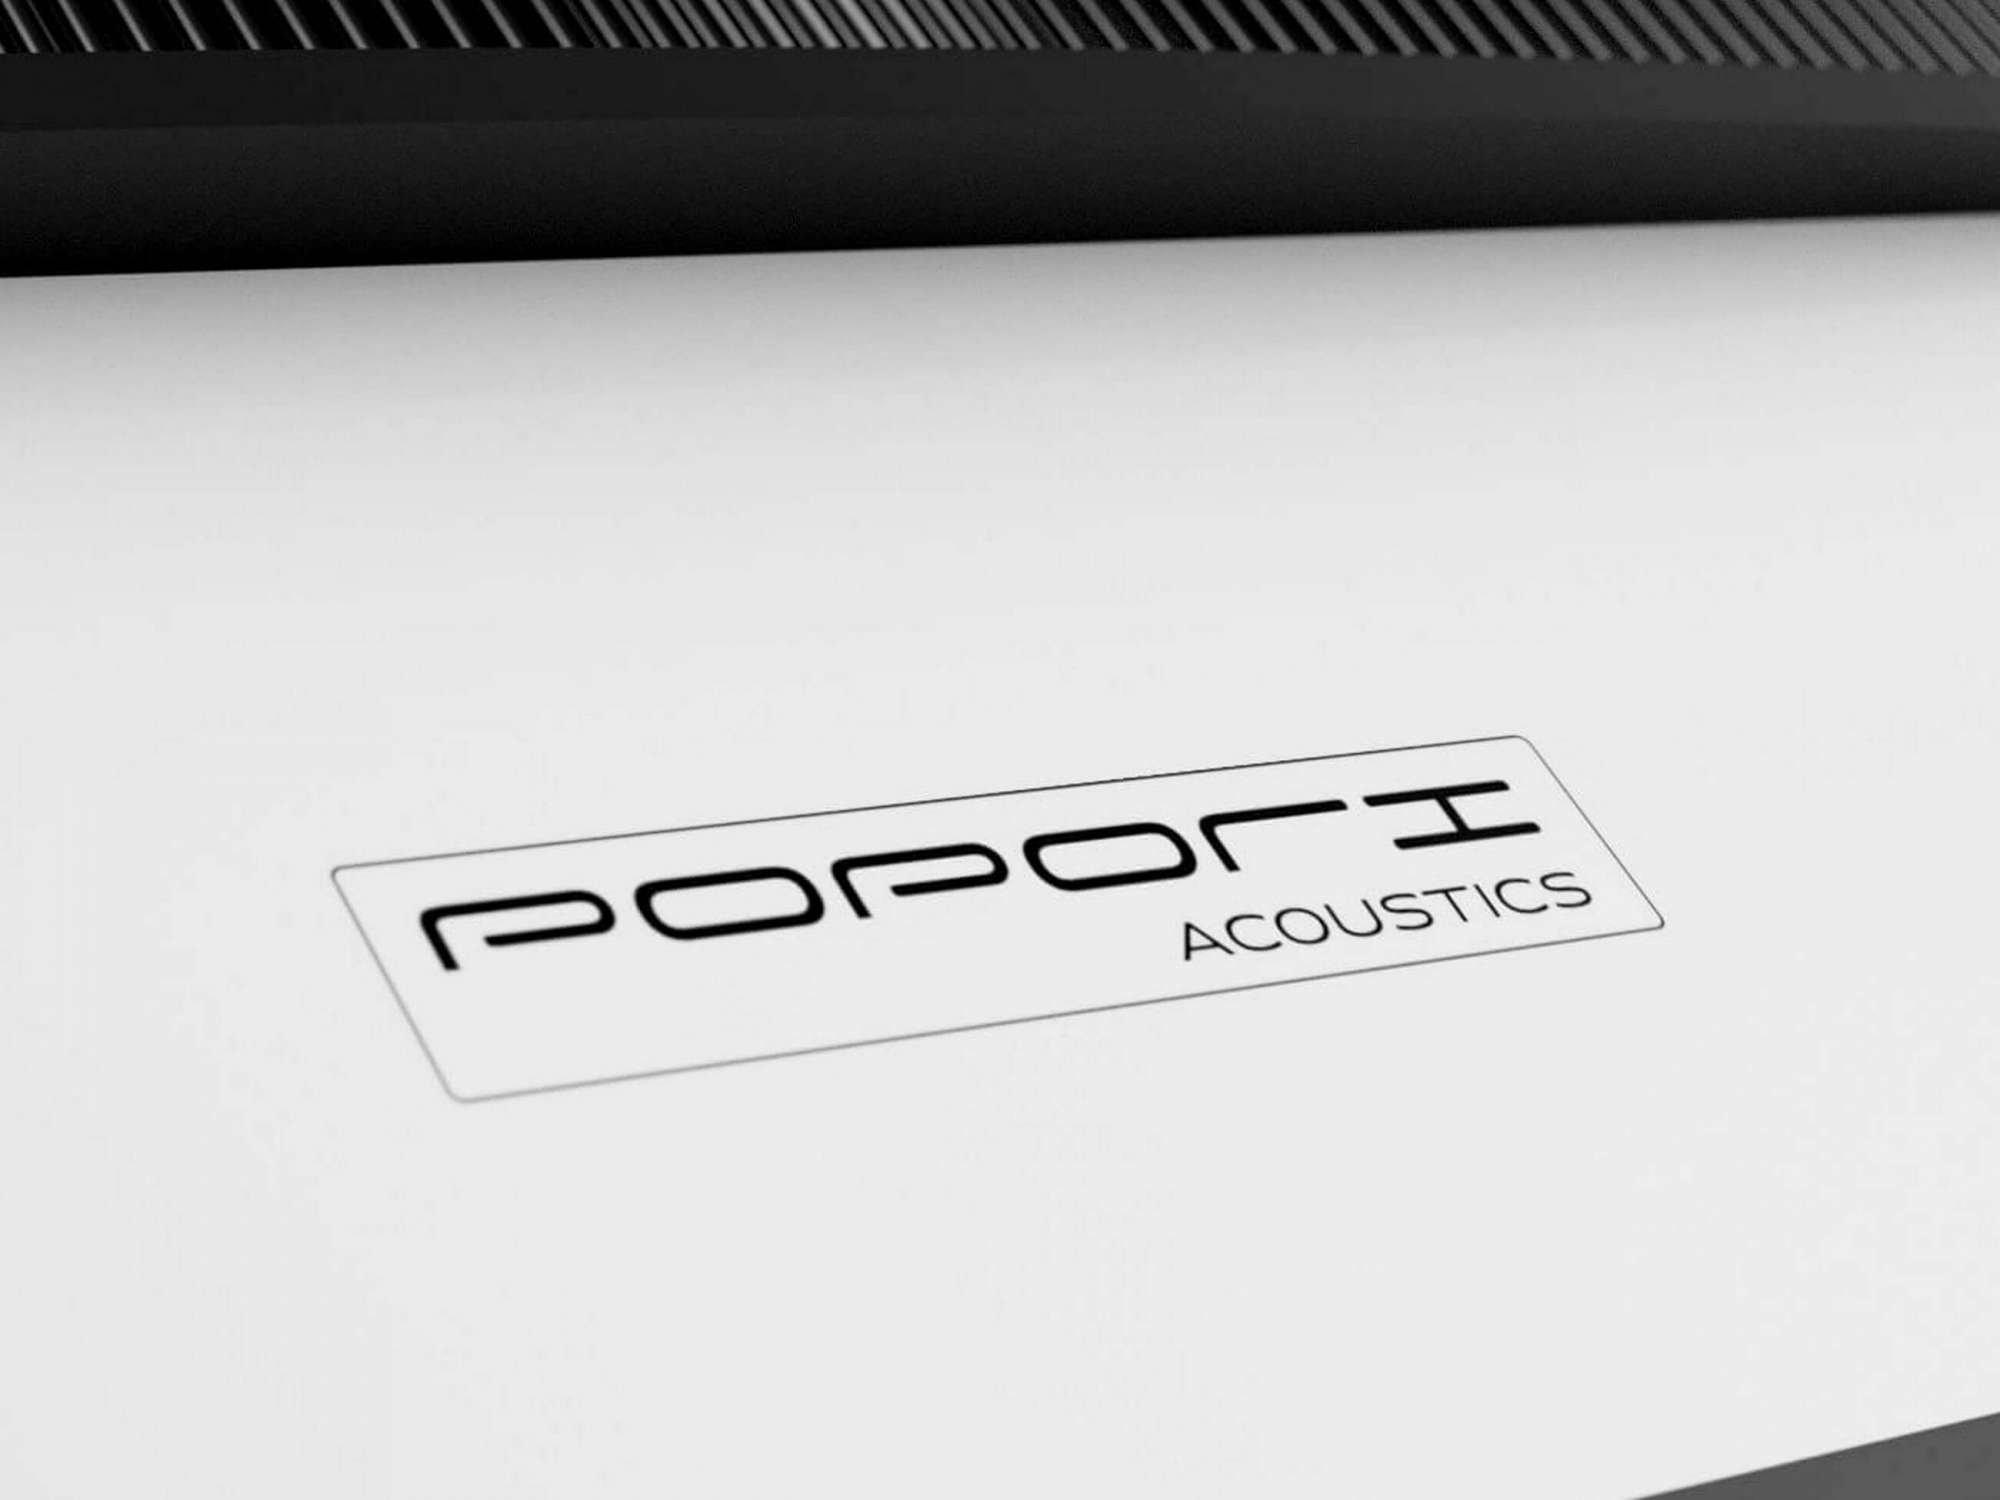 Popori Acoustics hangfal logo